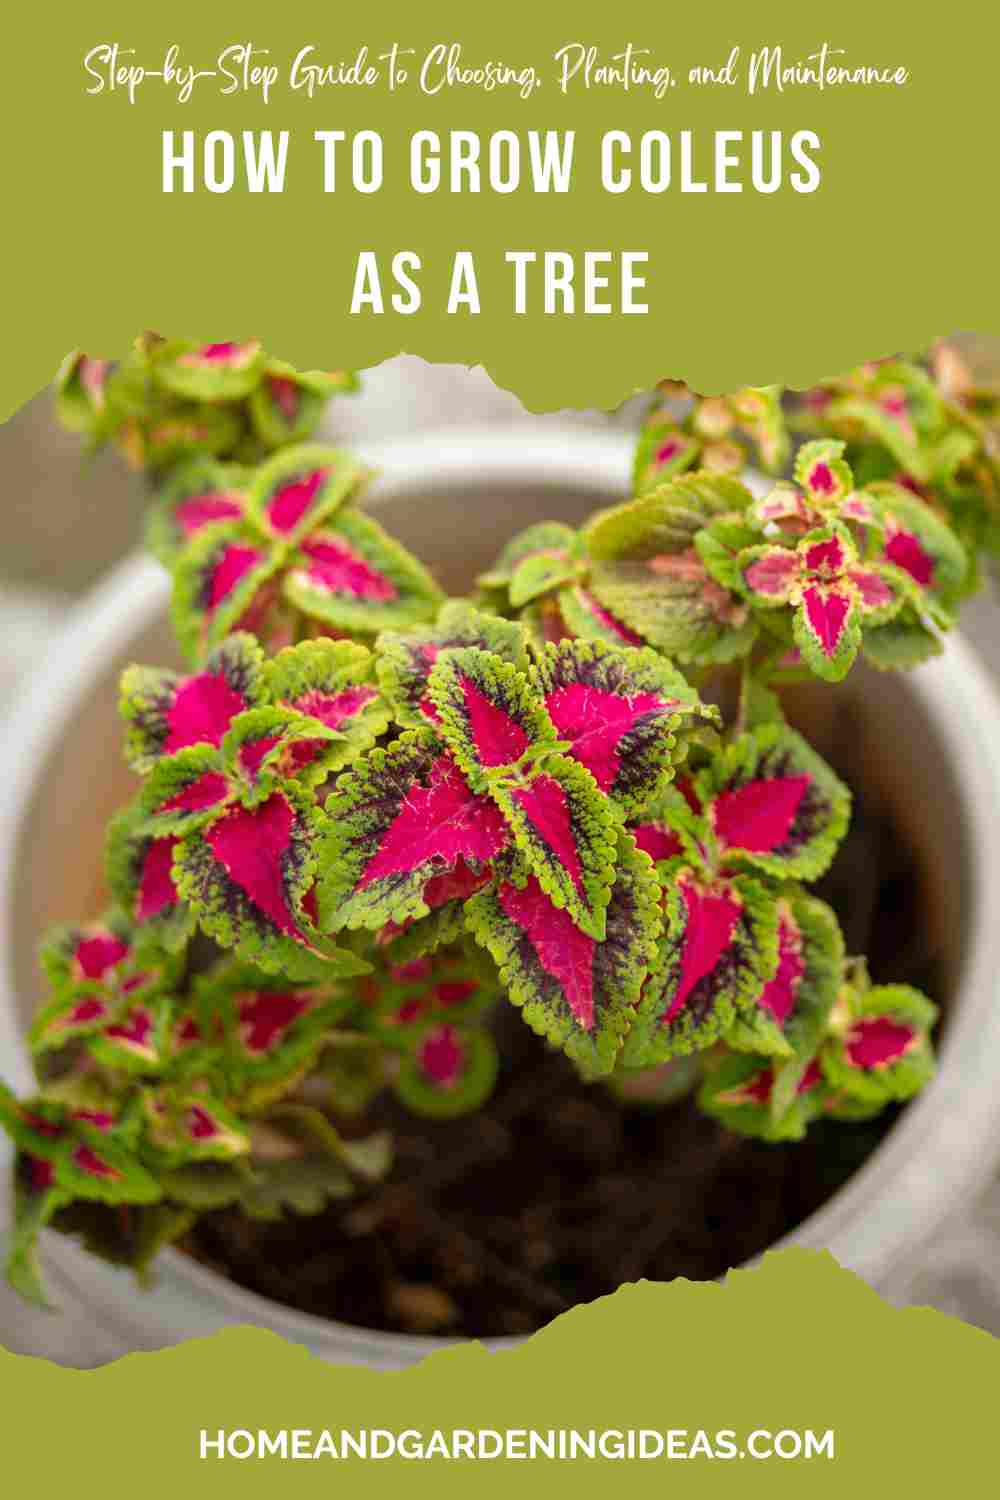 How to Grow Coleus as a Tree